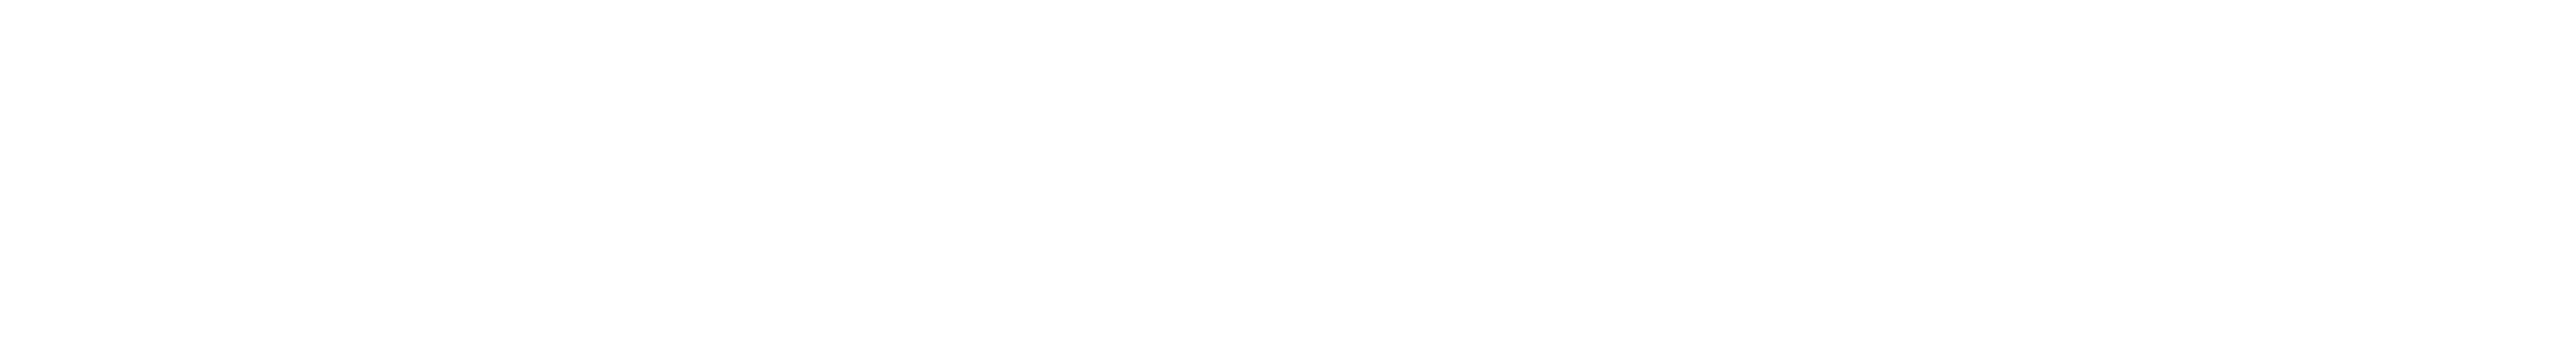 Binghamton Metropolitan Transportation Study